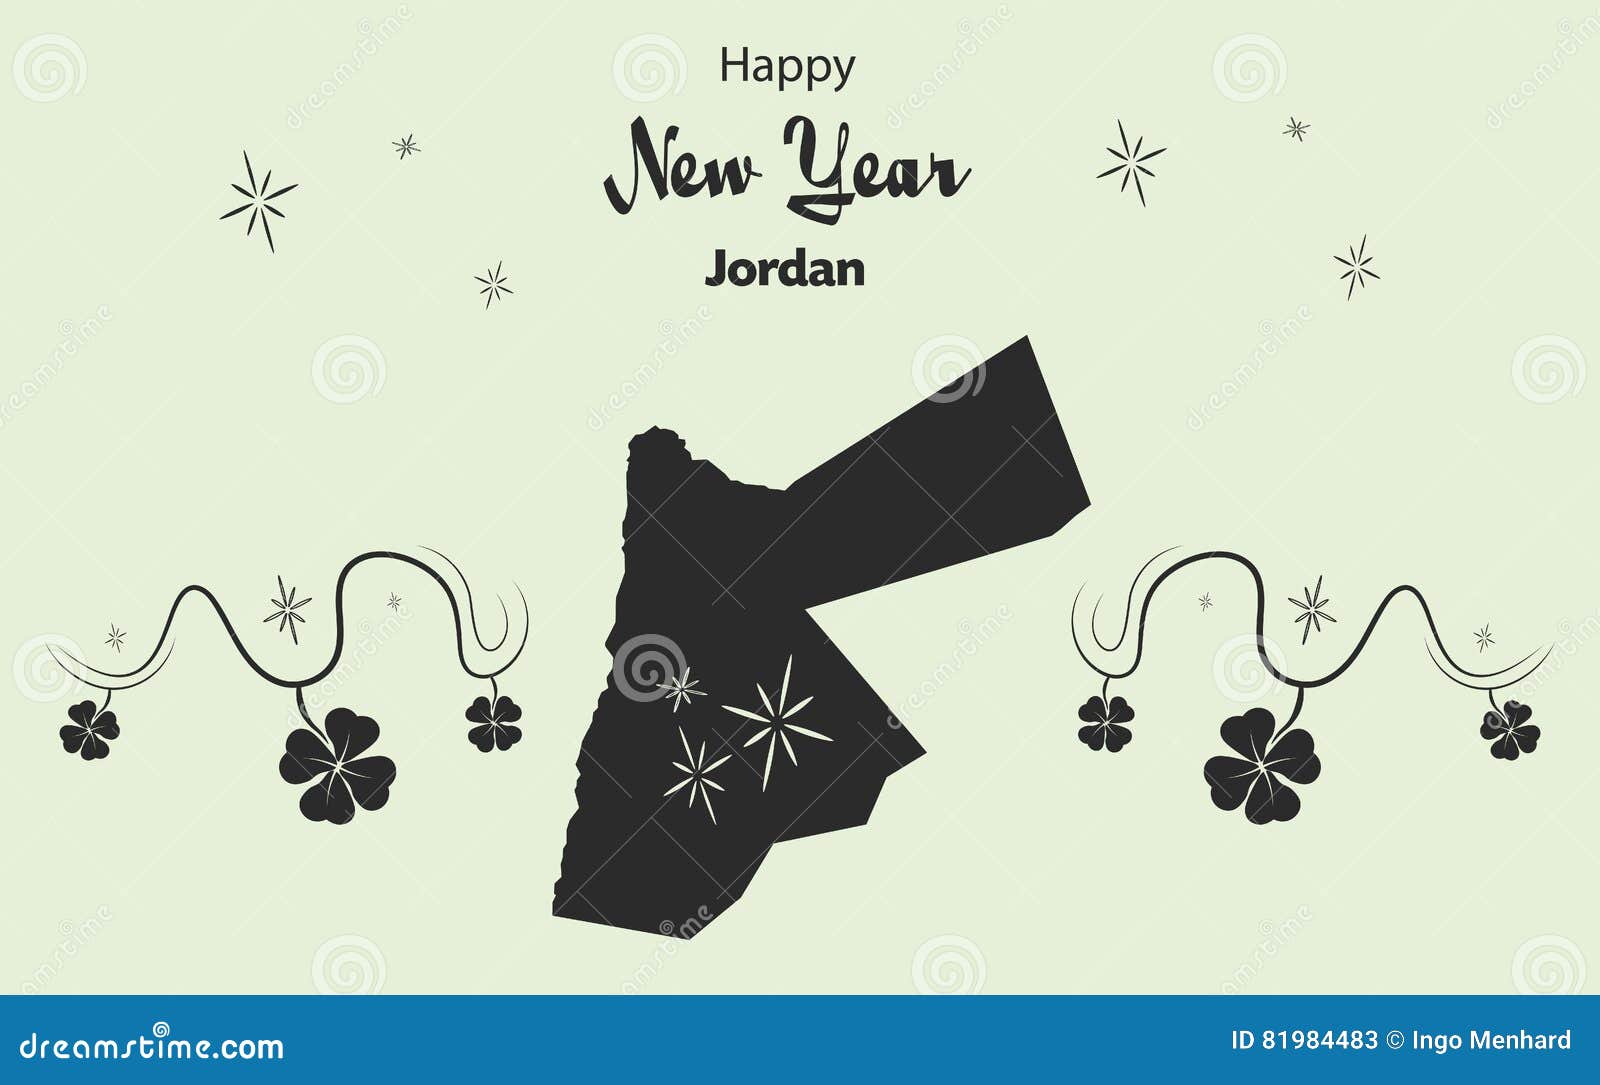 happy new year jordan